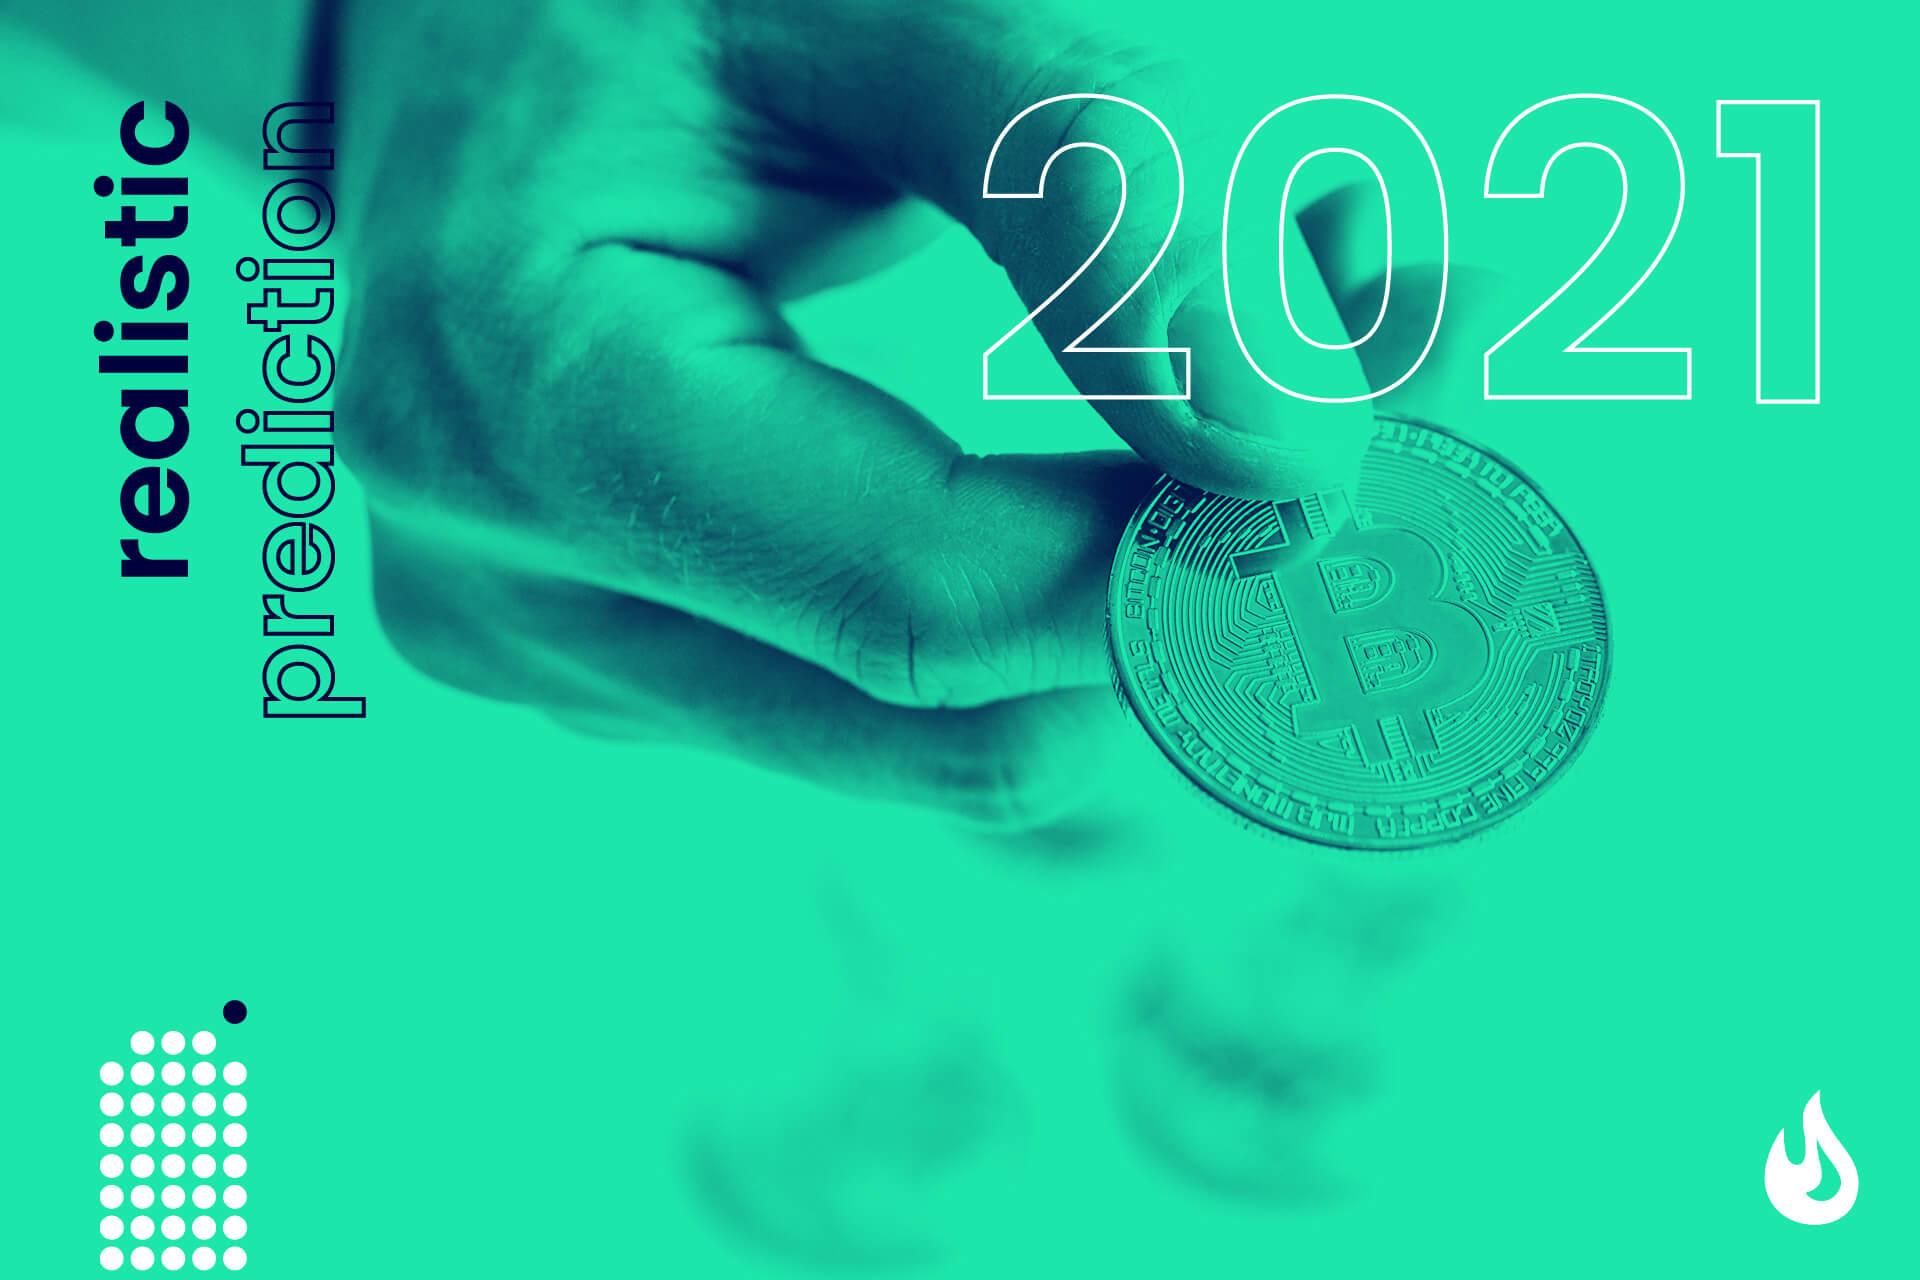 bitcoin price prediction 2021